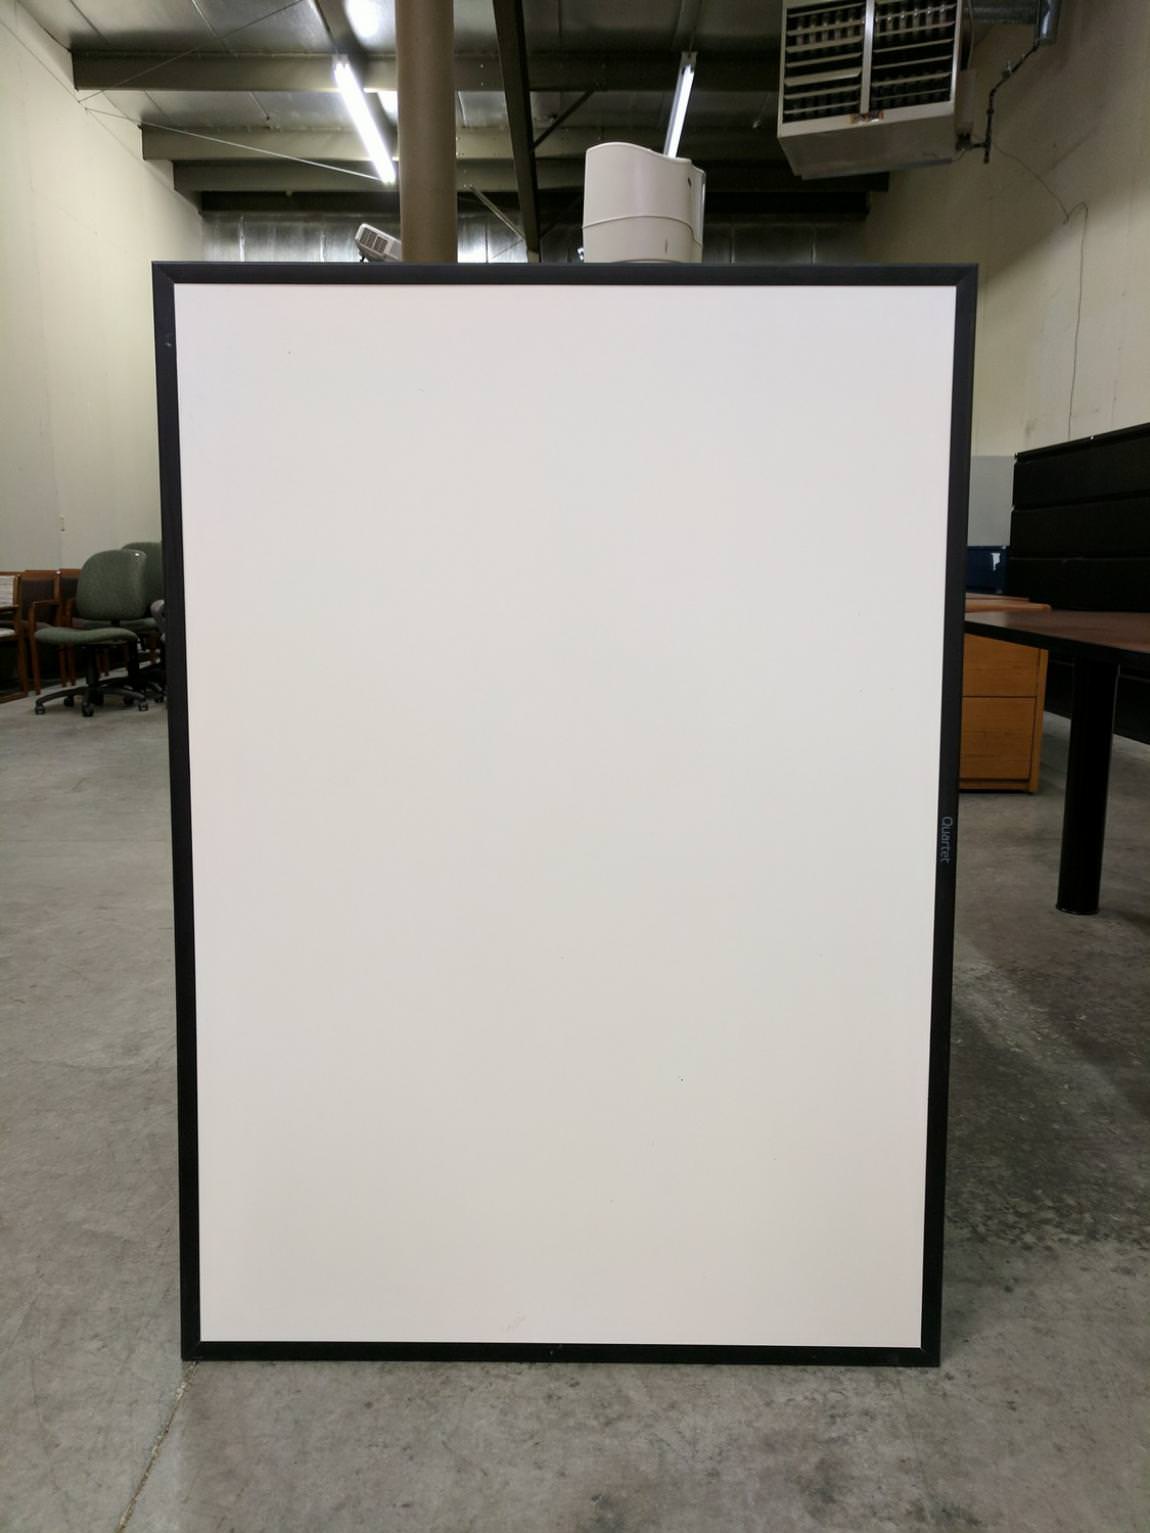 48x34 Quartet Dry Erase Whiteboard